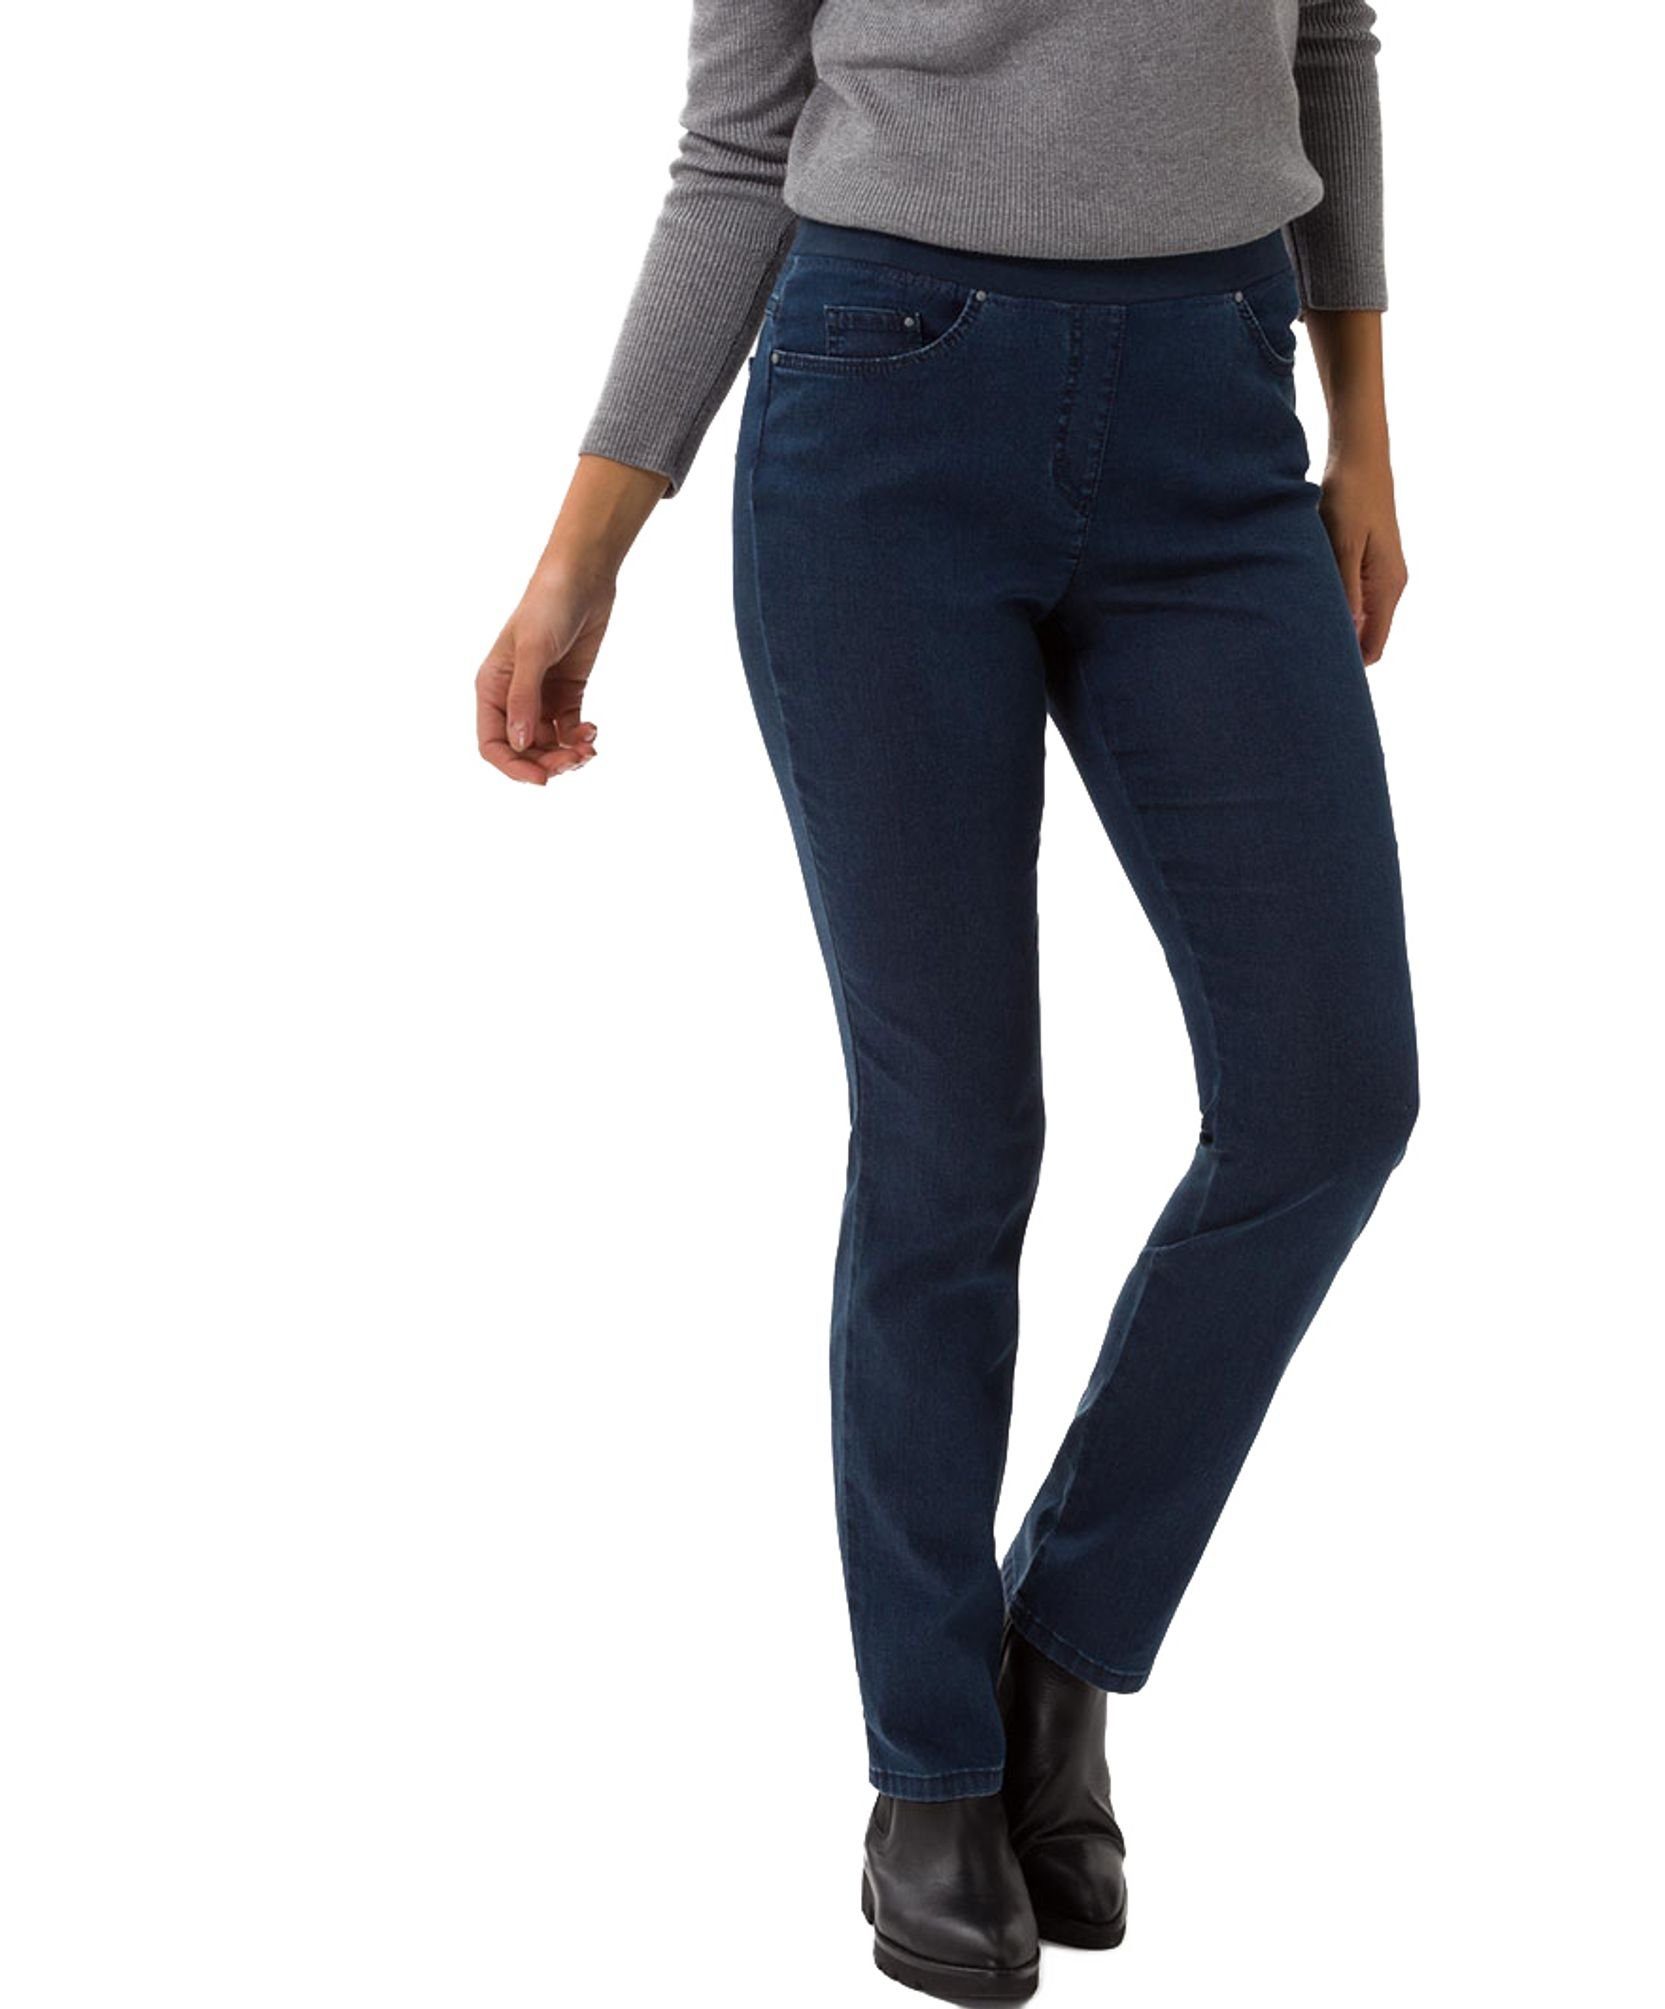 RAPHAELA by BRAX 5-Pocket-Jeans 10-6220 Stoned (25)